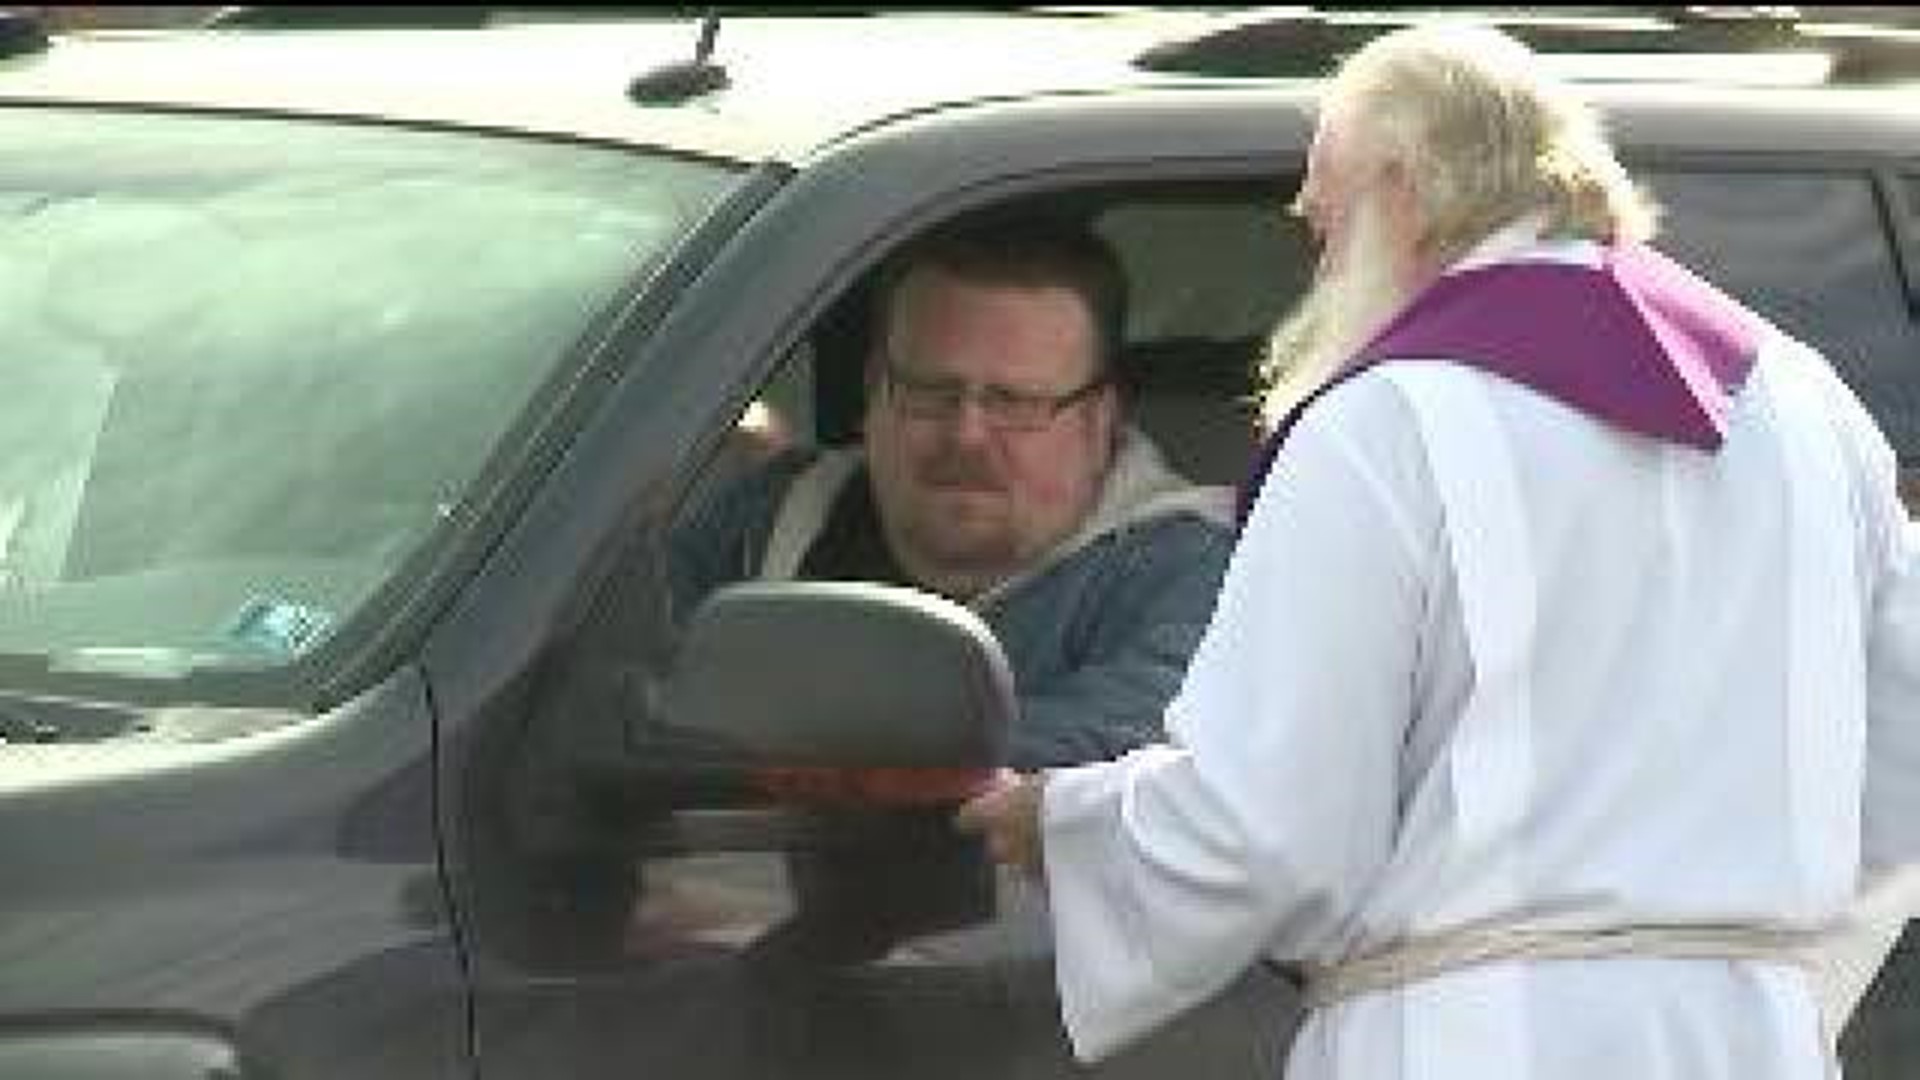 Church Offers Drive-Thru Service on Ash Wednesday